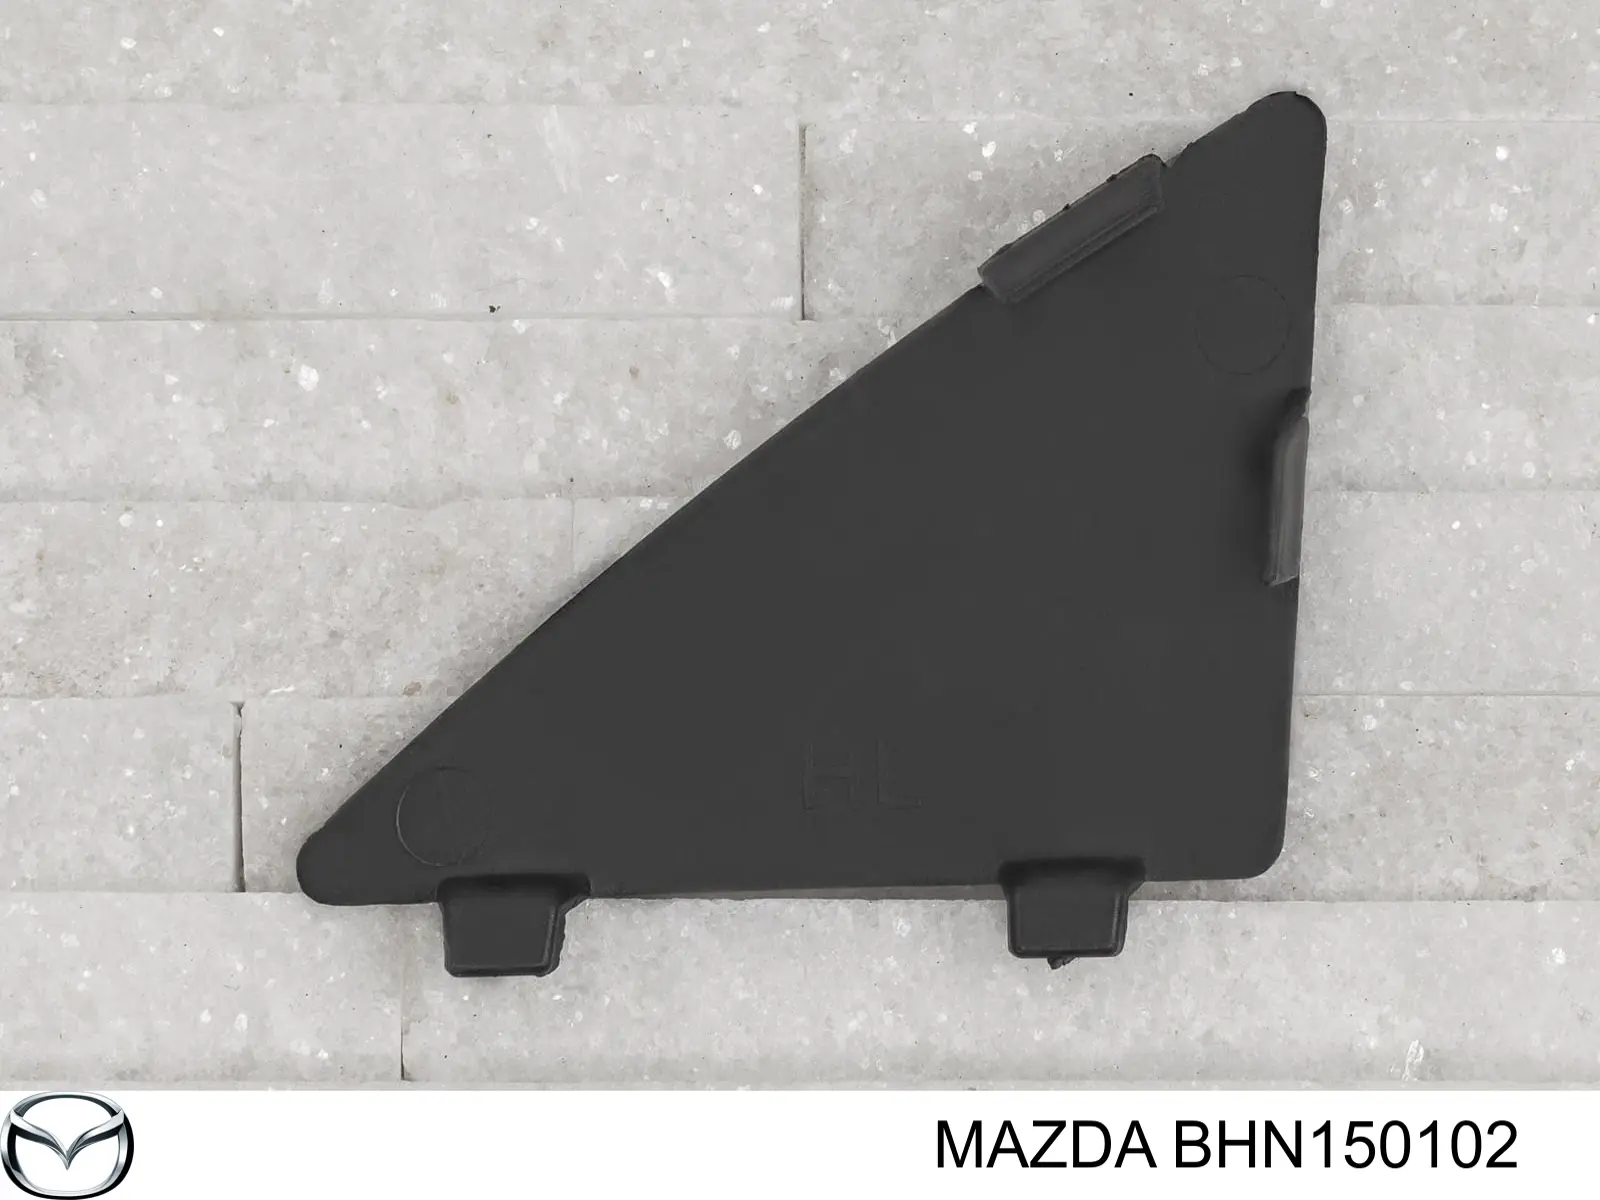 BHN150102 Mazda cobertura de parachoques, enganche de remolque, delantera izquierda